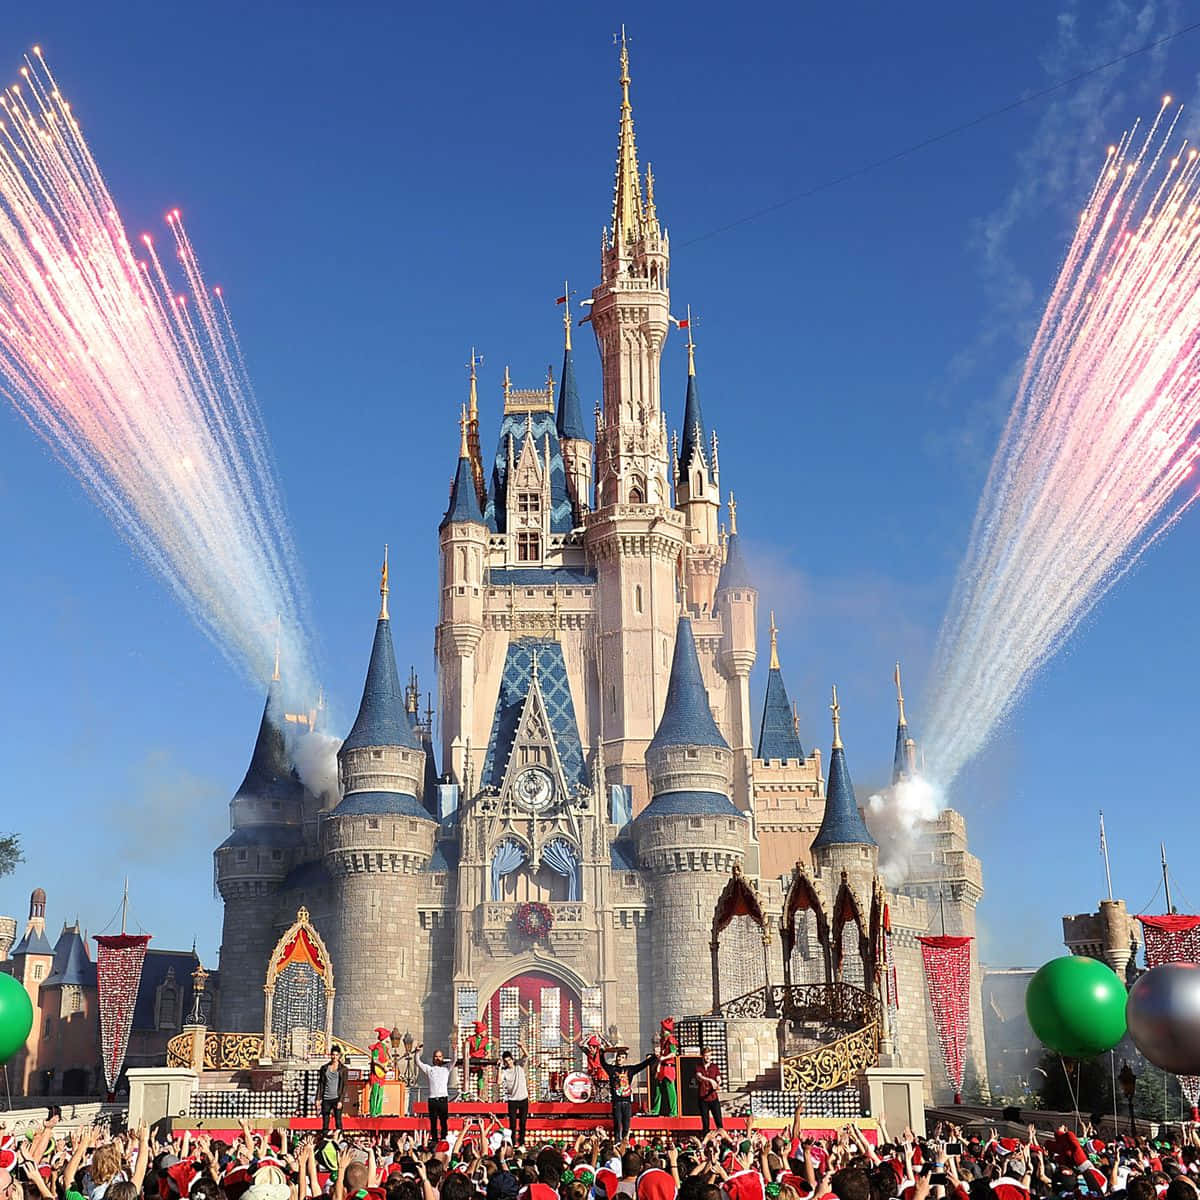 Enjoy A Magical Day At Disney World